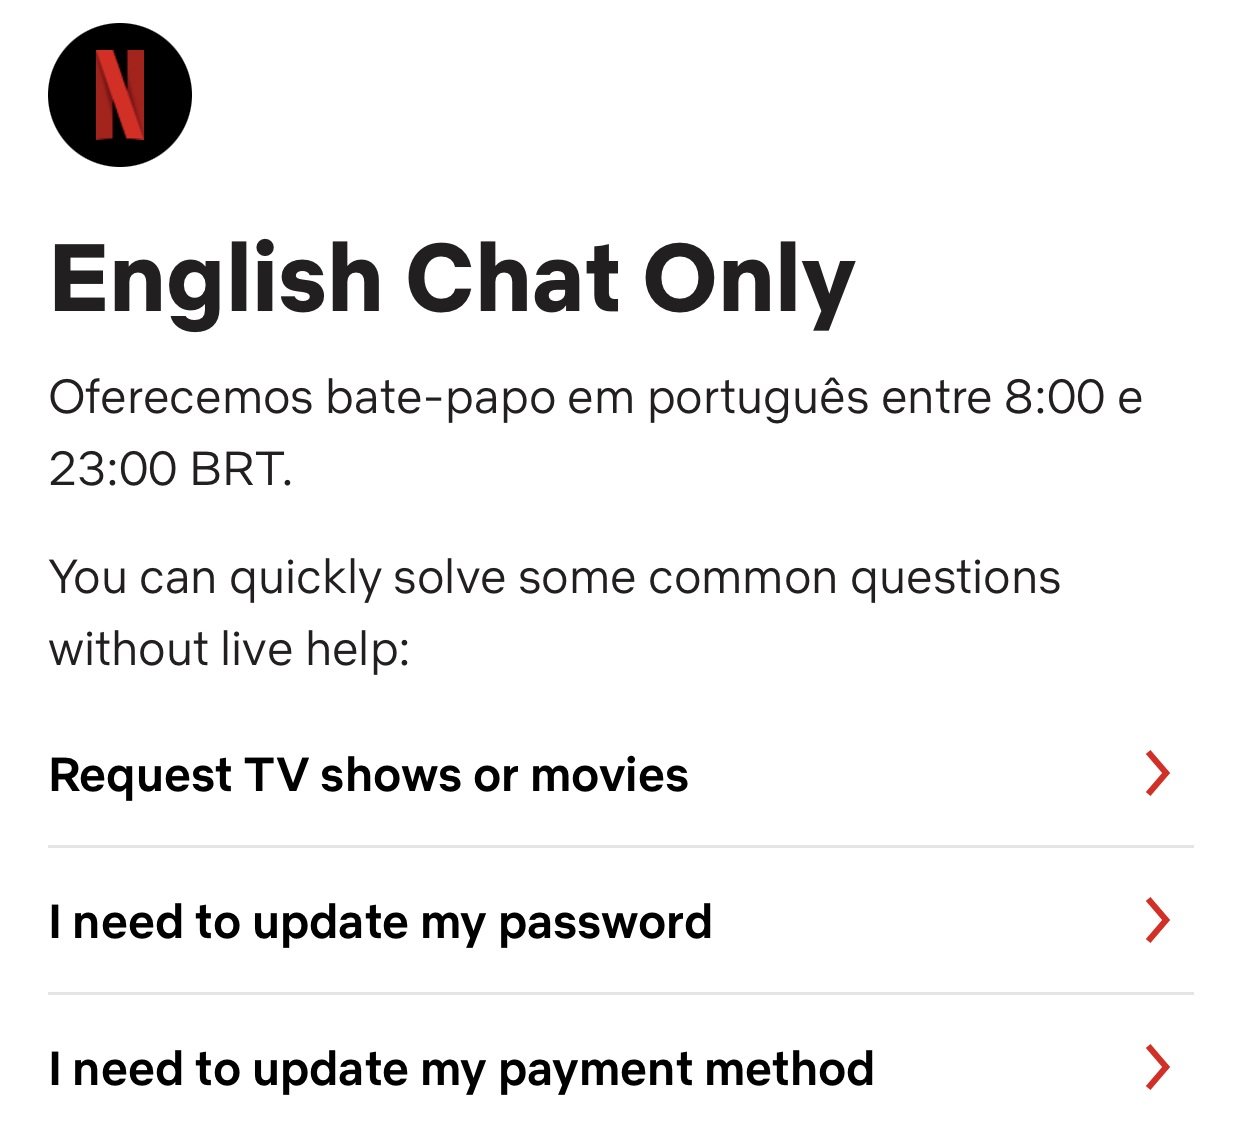 WhatsApp Netflix: Telefone, 0800, chat e ouvidoria - HPG